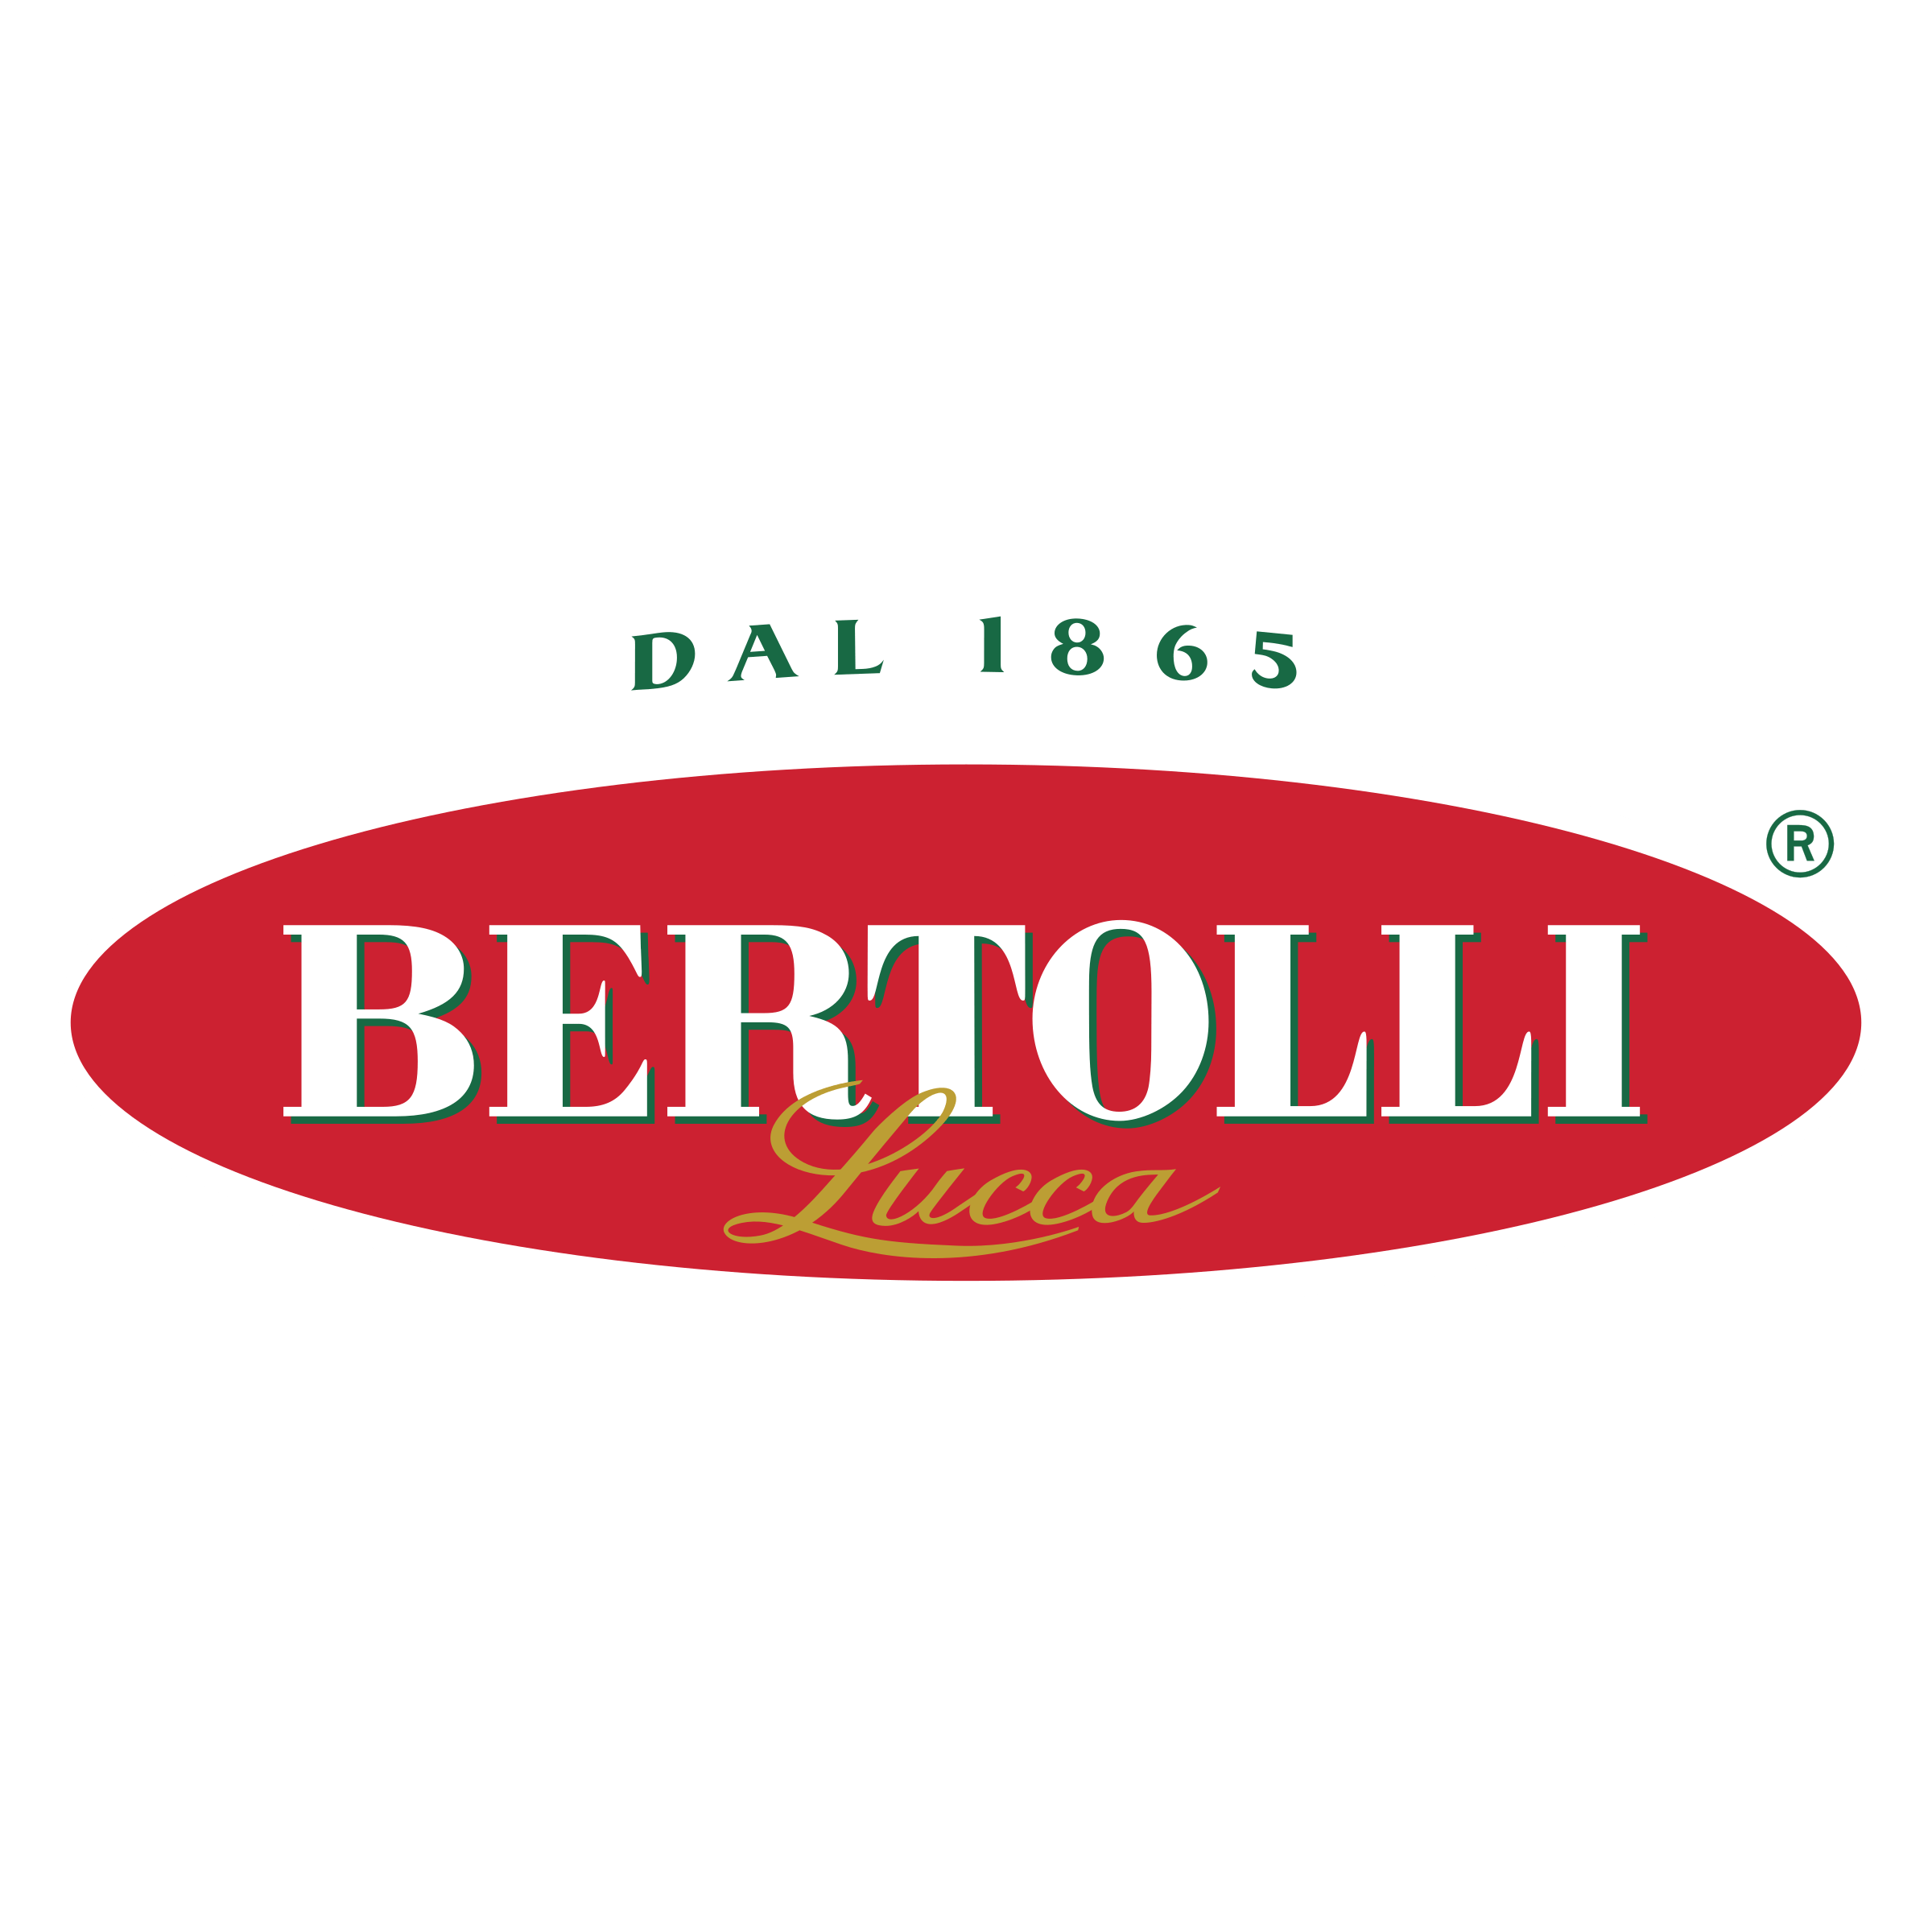 Bertolli Logo - Bertolli Logo PNG Transparent & SVG Vector - Freebie Supply